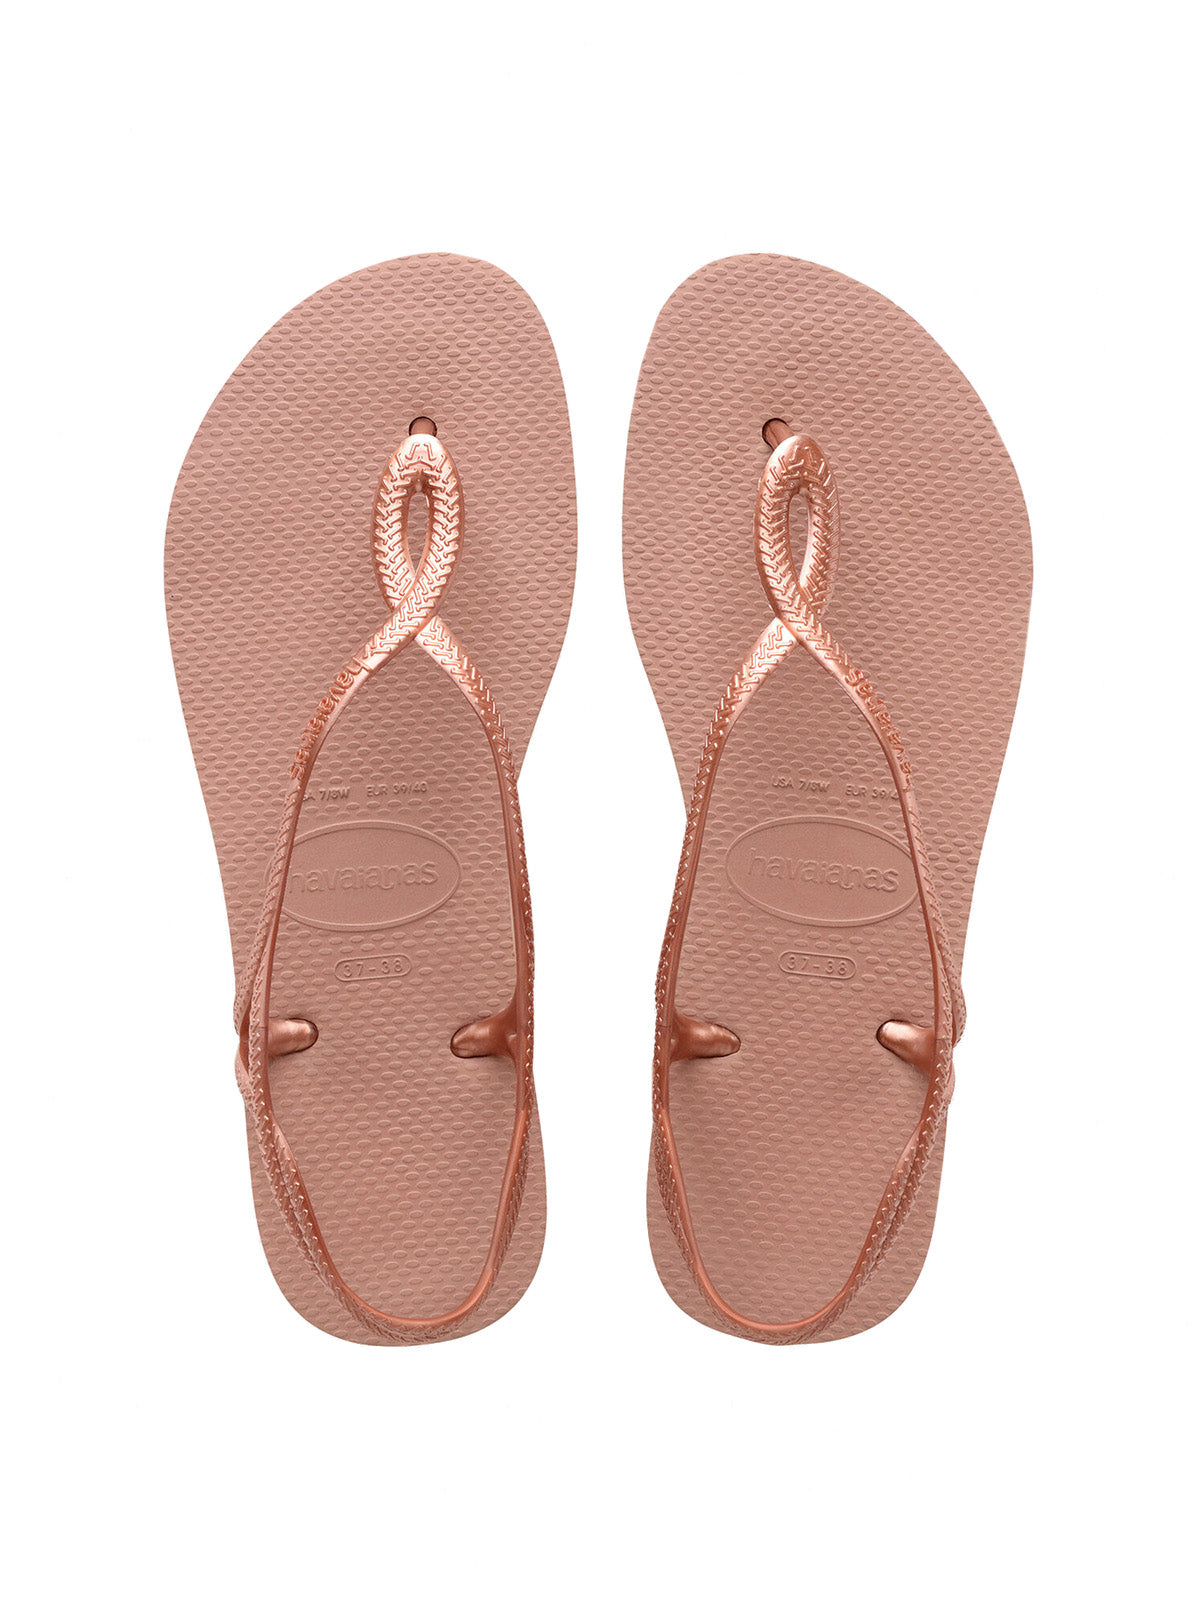 Havaianas Women's Sandals - Havaianas Luna - Pink